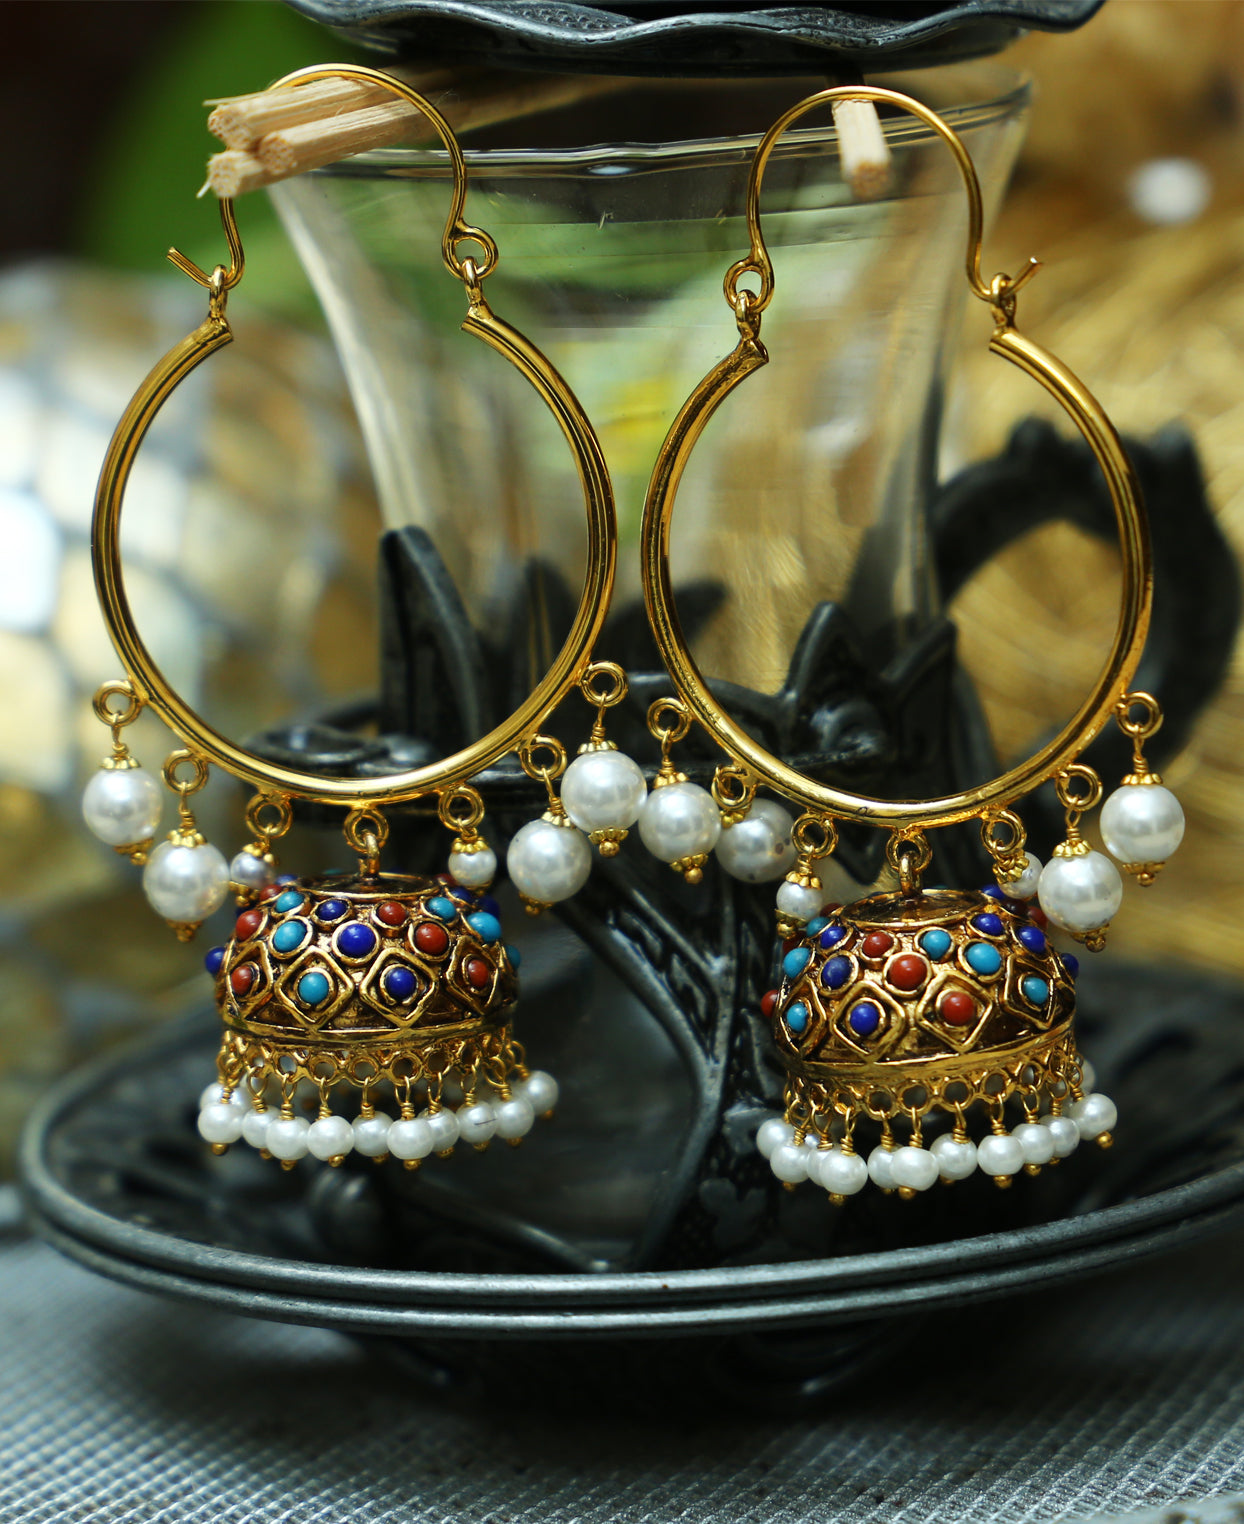 Buy Gold Jhumka Indian Jewelry Pakistani Jewelry Punjabi Online in India   Etsy